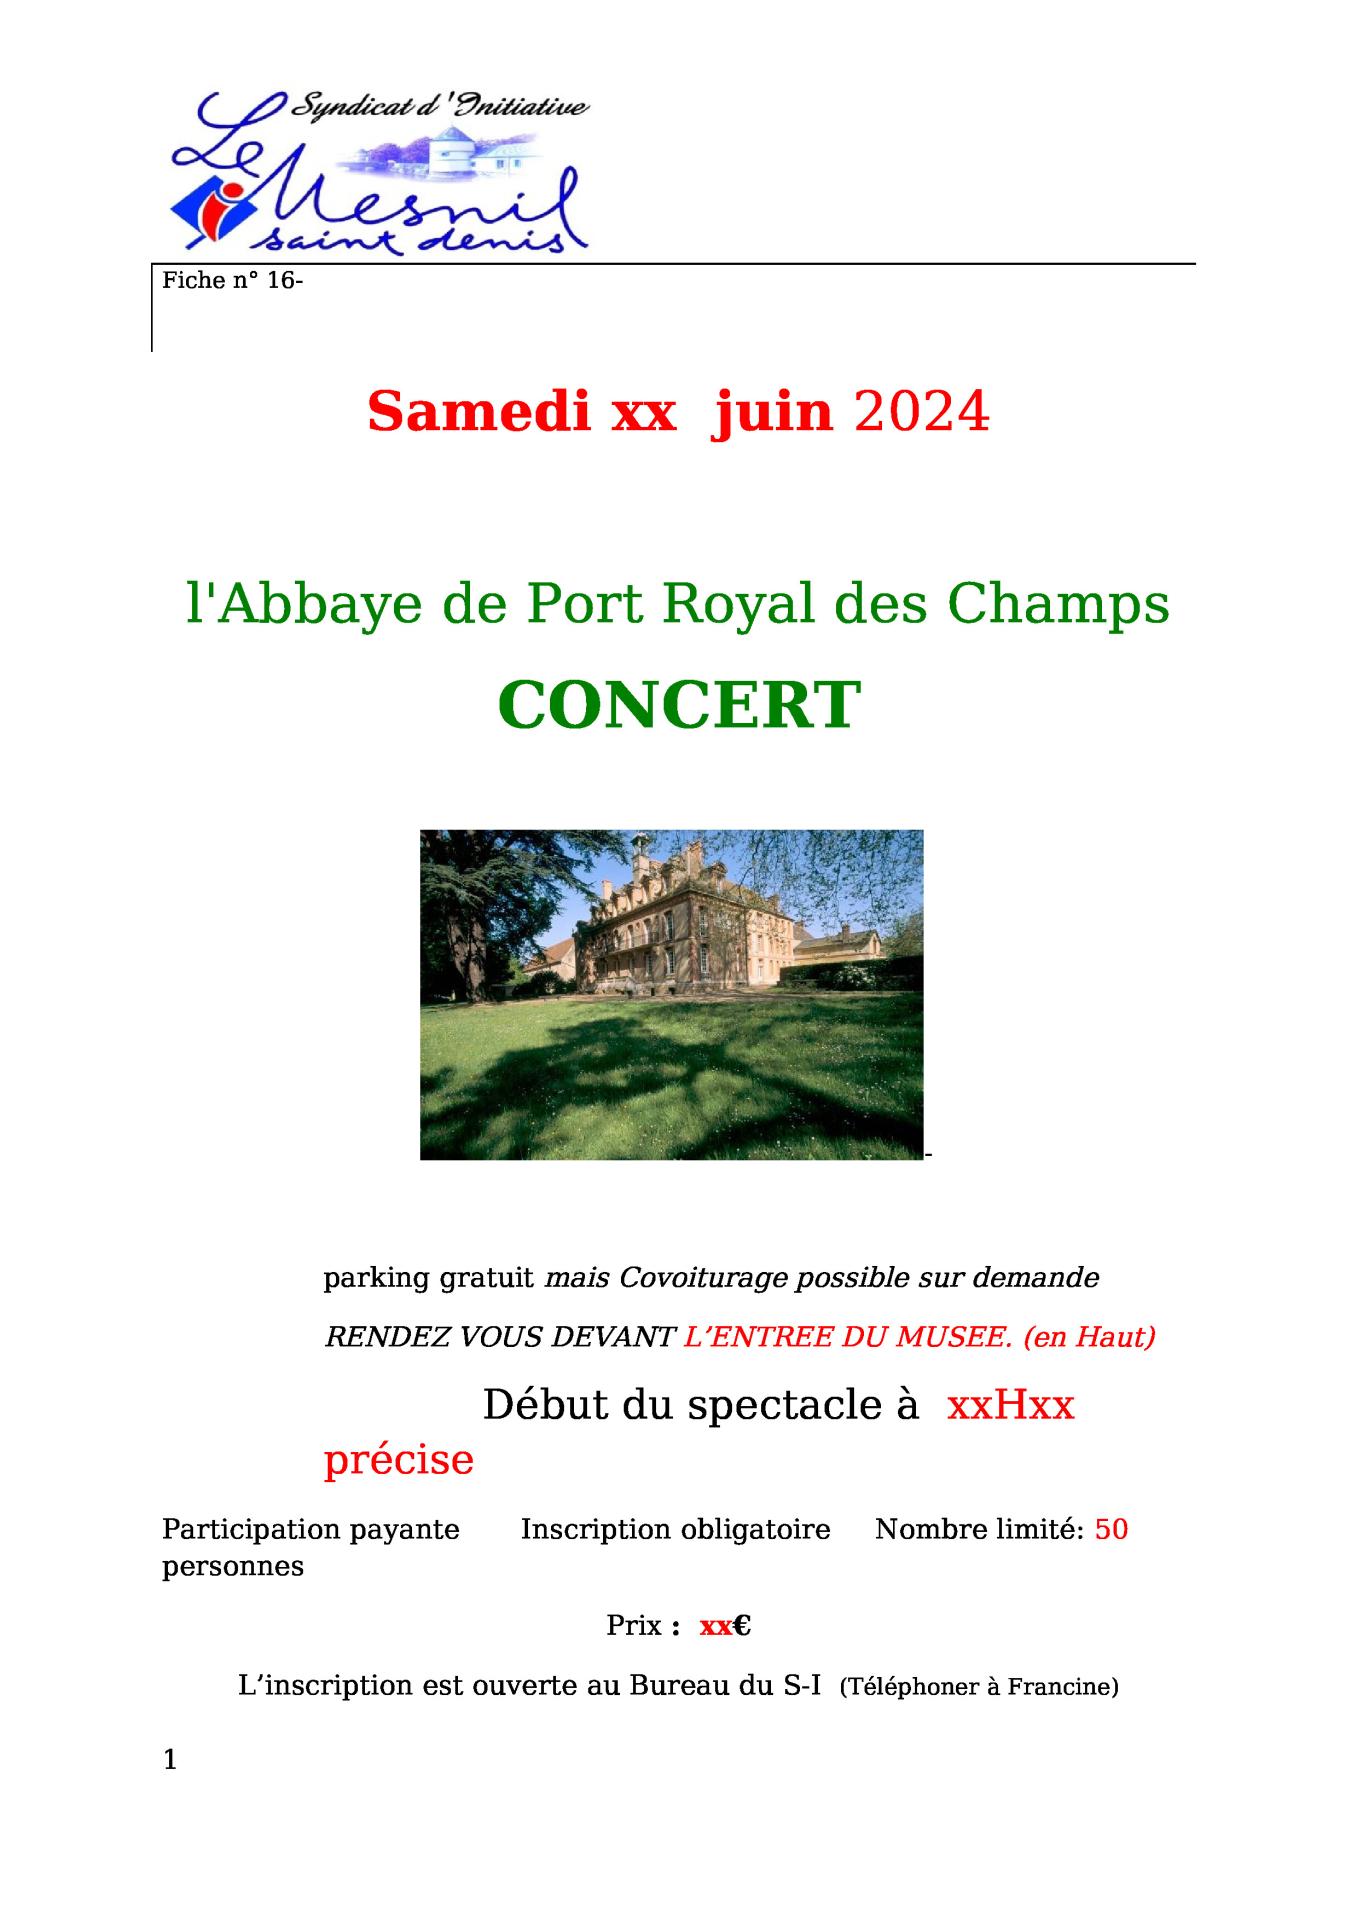 F16 concert abb port royal 0